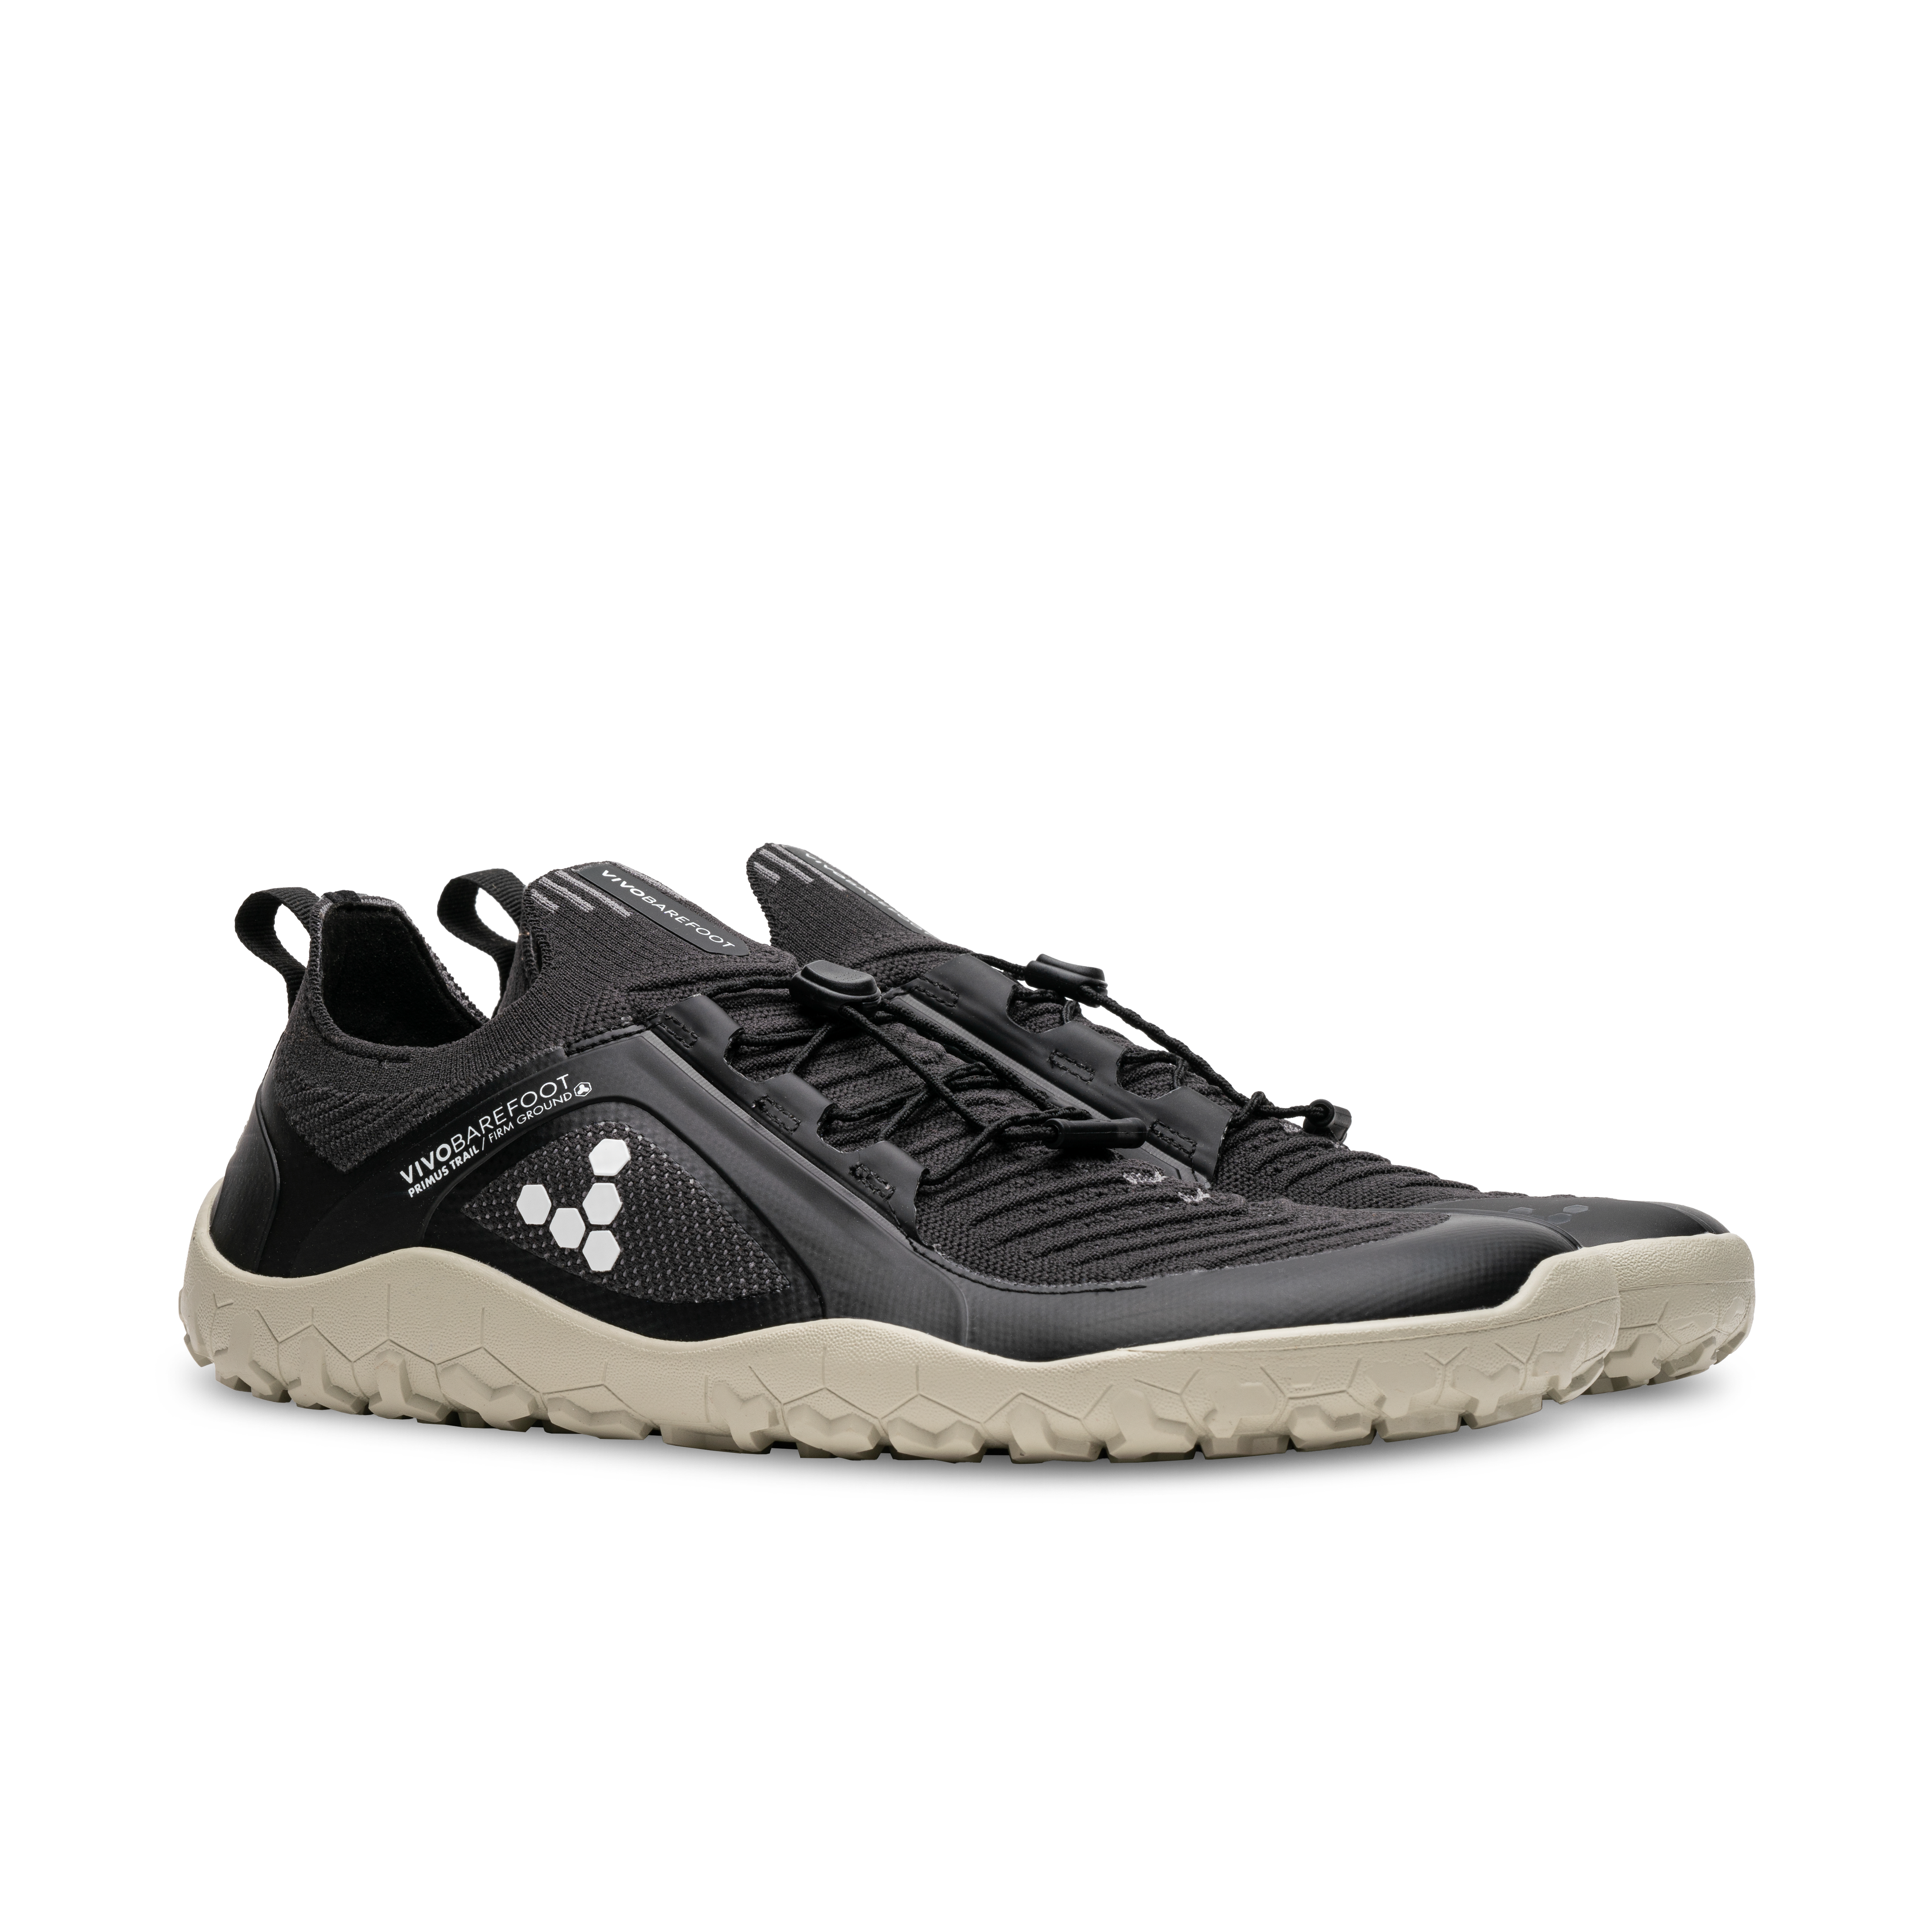 Vivobarefoot Primus Trail Knit FG Mens i Obsidian / Limestone, barfodsvenlige sko designet til terrænløb med åndbar mesh overdel og skridsikker sål